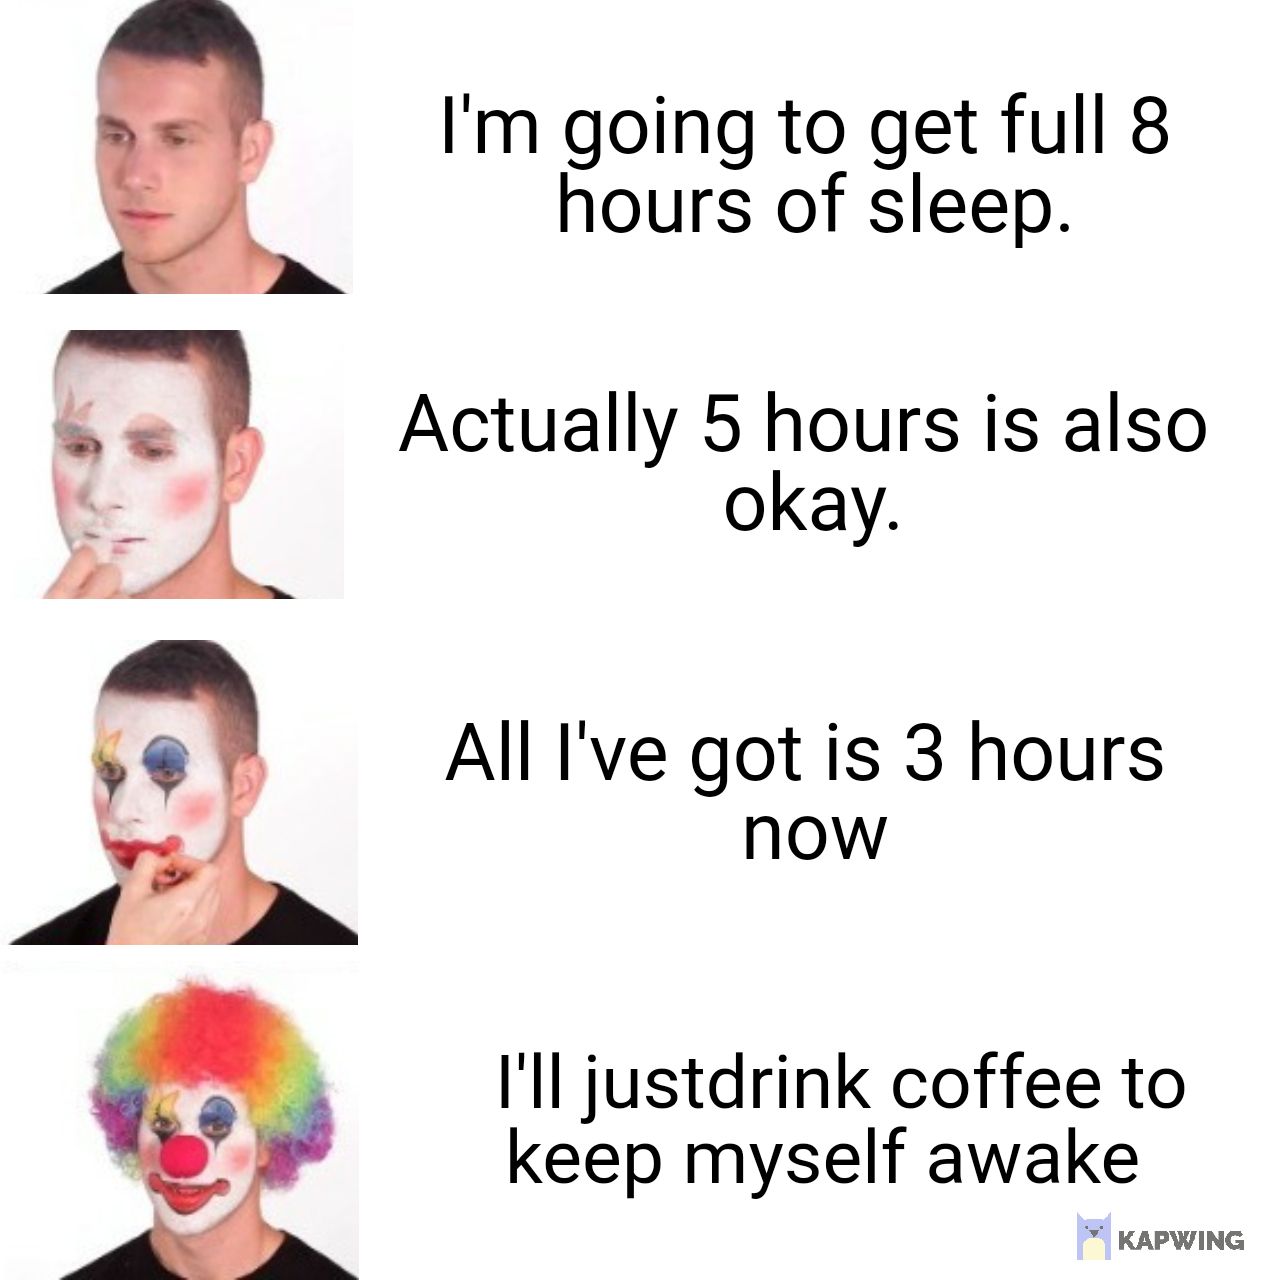 sleeping schedule in nutshell